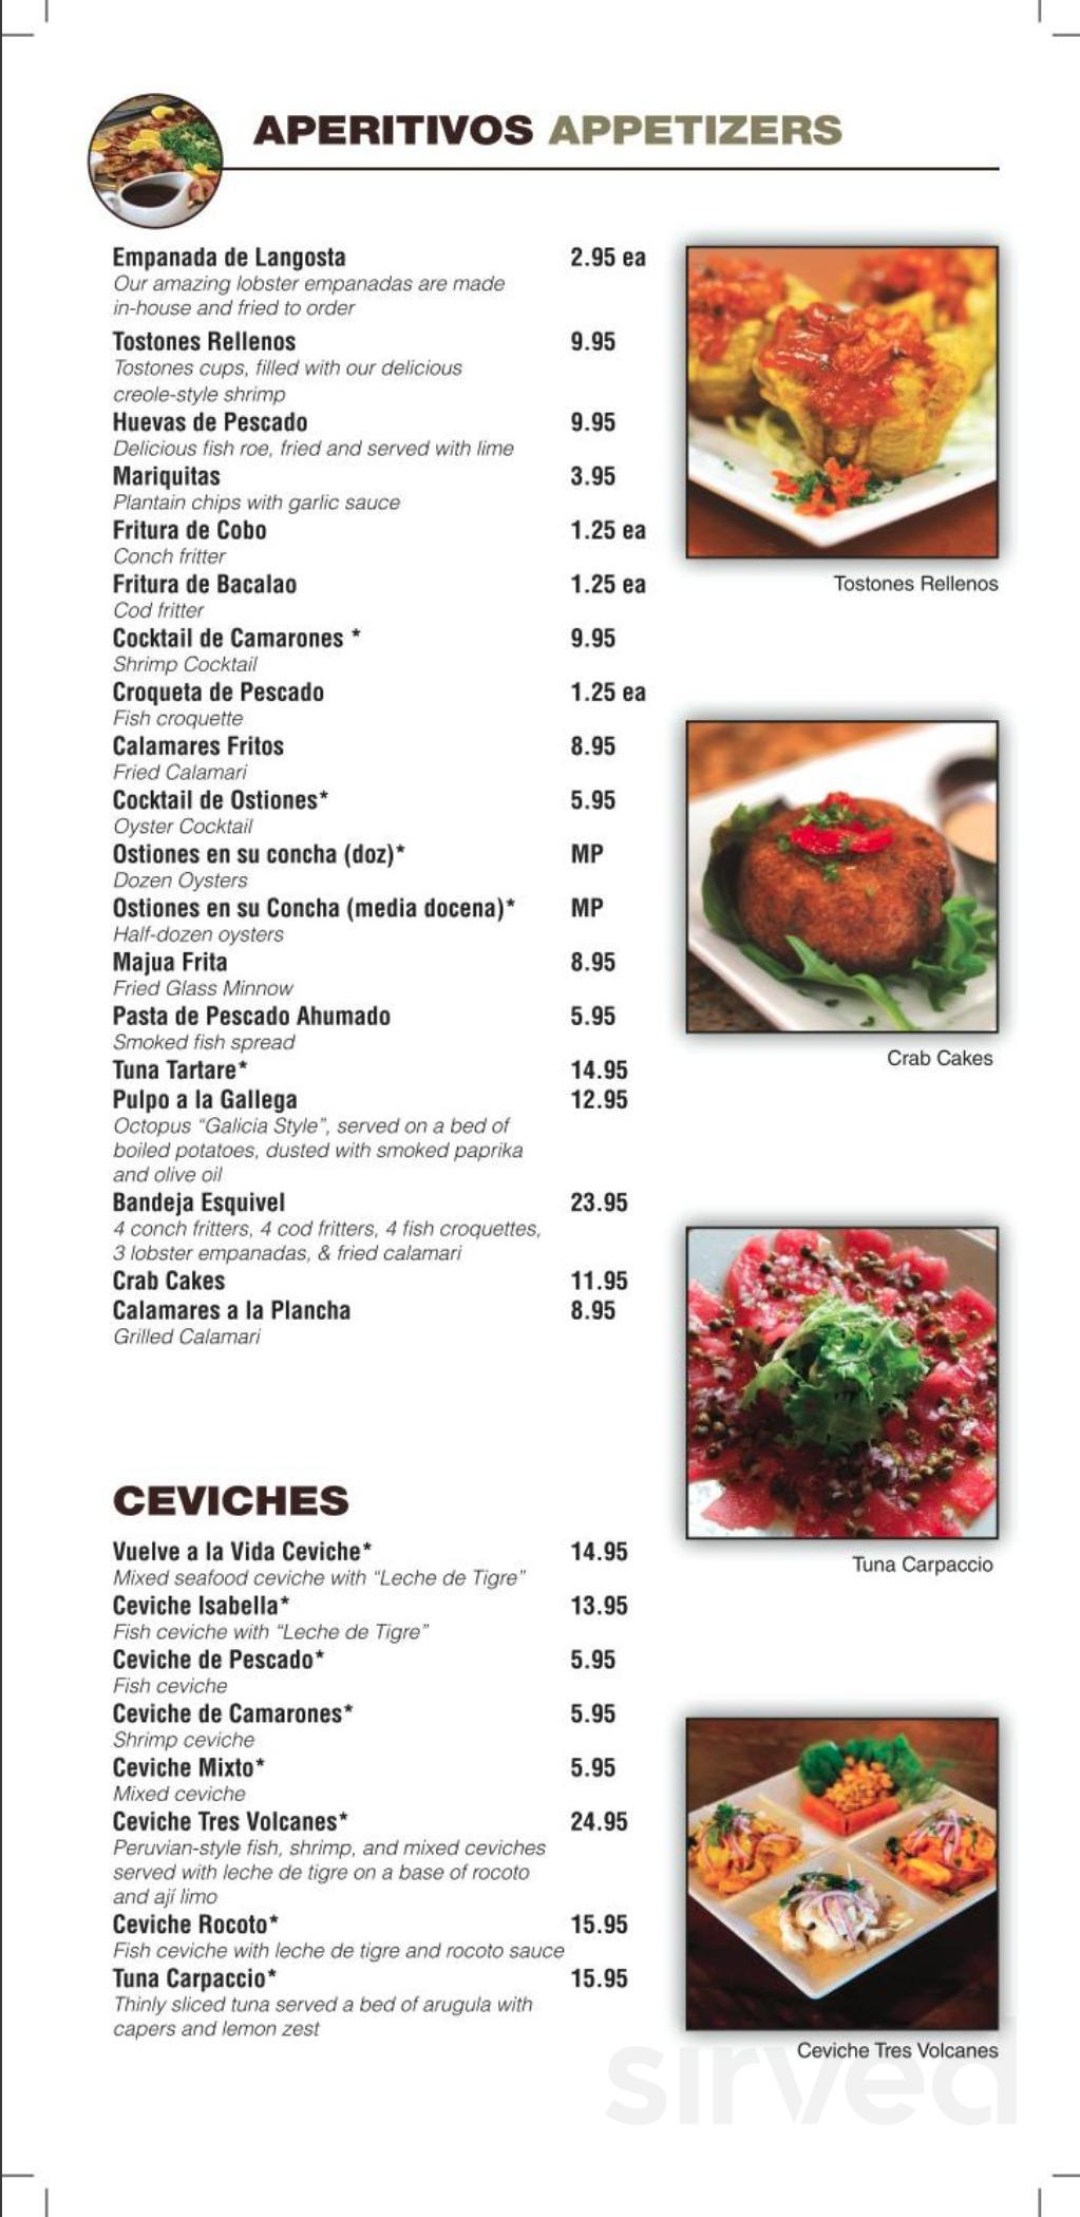 Picture of: Cayo Esquivel Seafood menu in Miami, Florida, USA